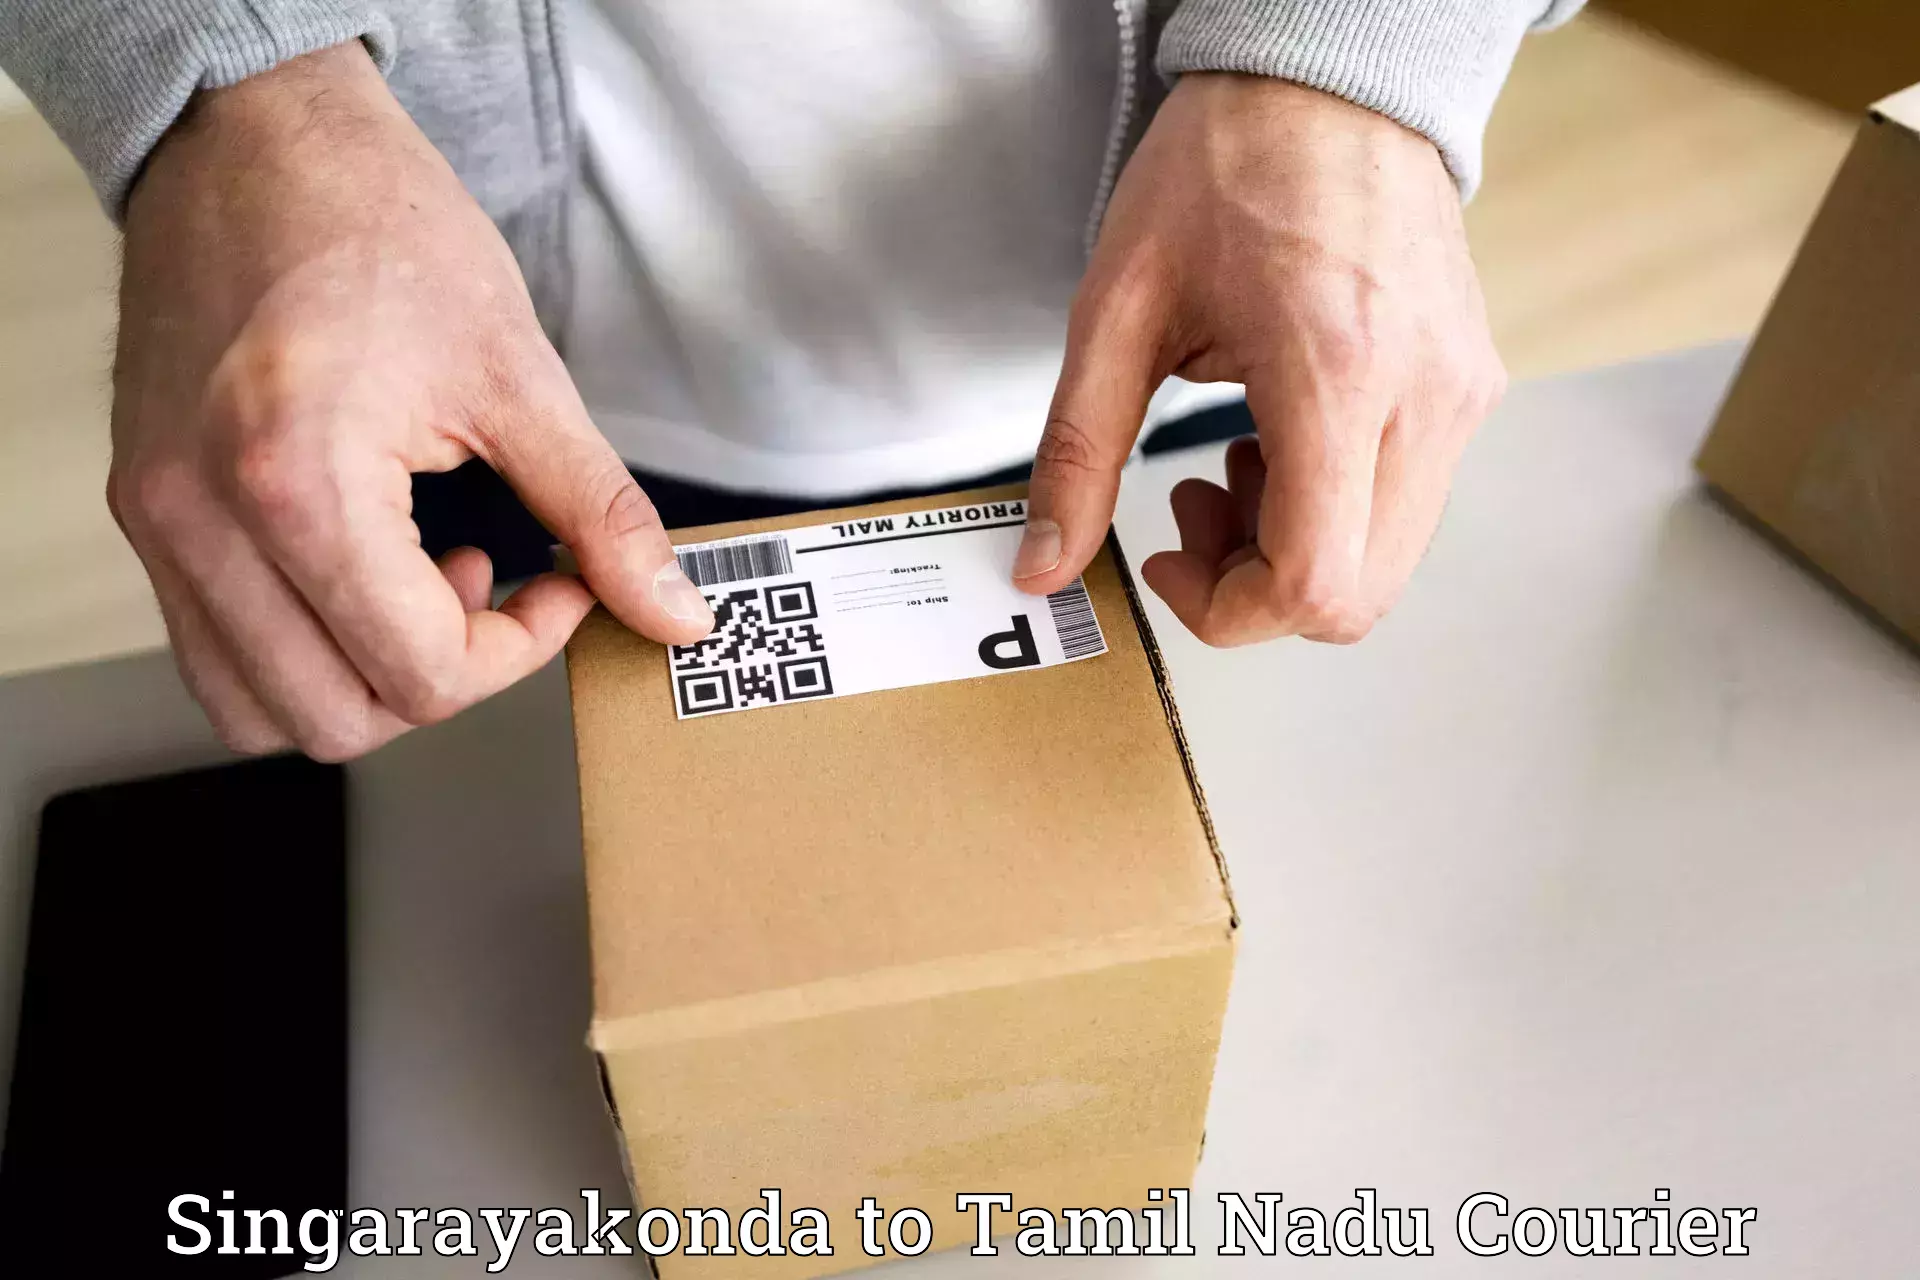 Bulk courier orders Singarayakonda to Cuddalore